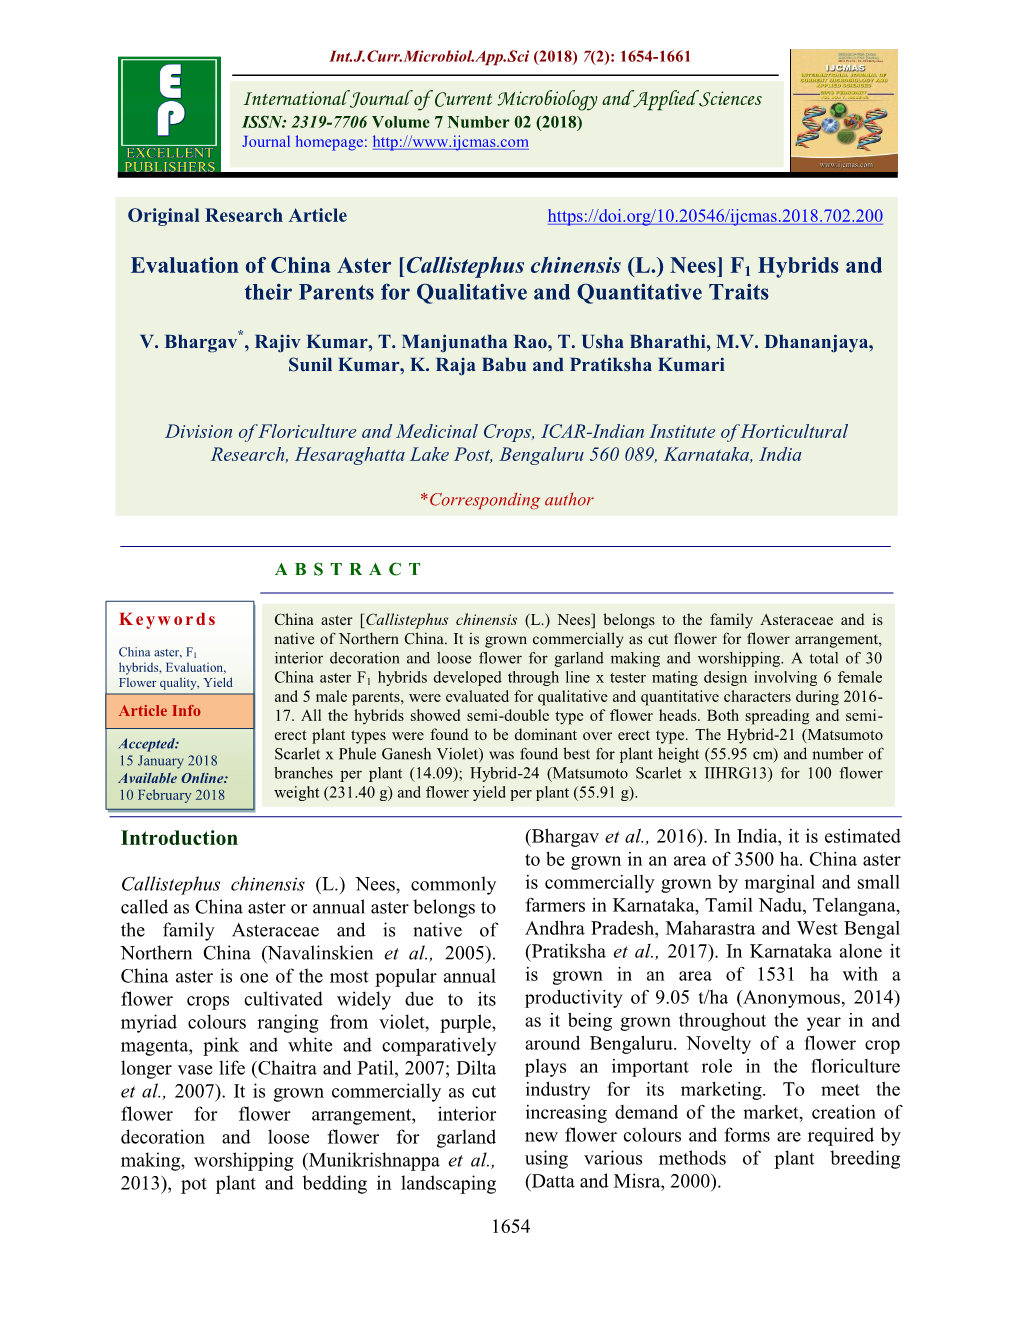 Evaluation of China Aster [Callistephus Chinensis (L.) Nees] F1 Hybrids and Their Parents for Qualitative and Quantitative Traits